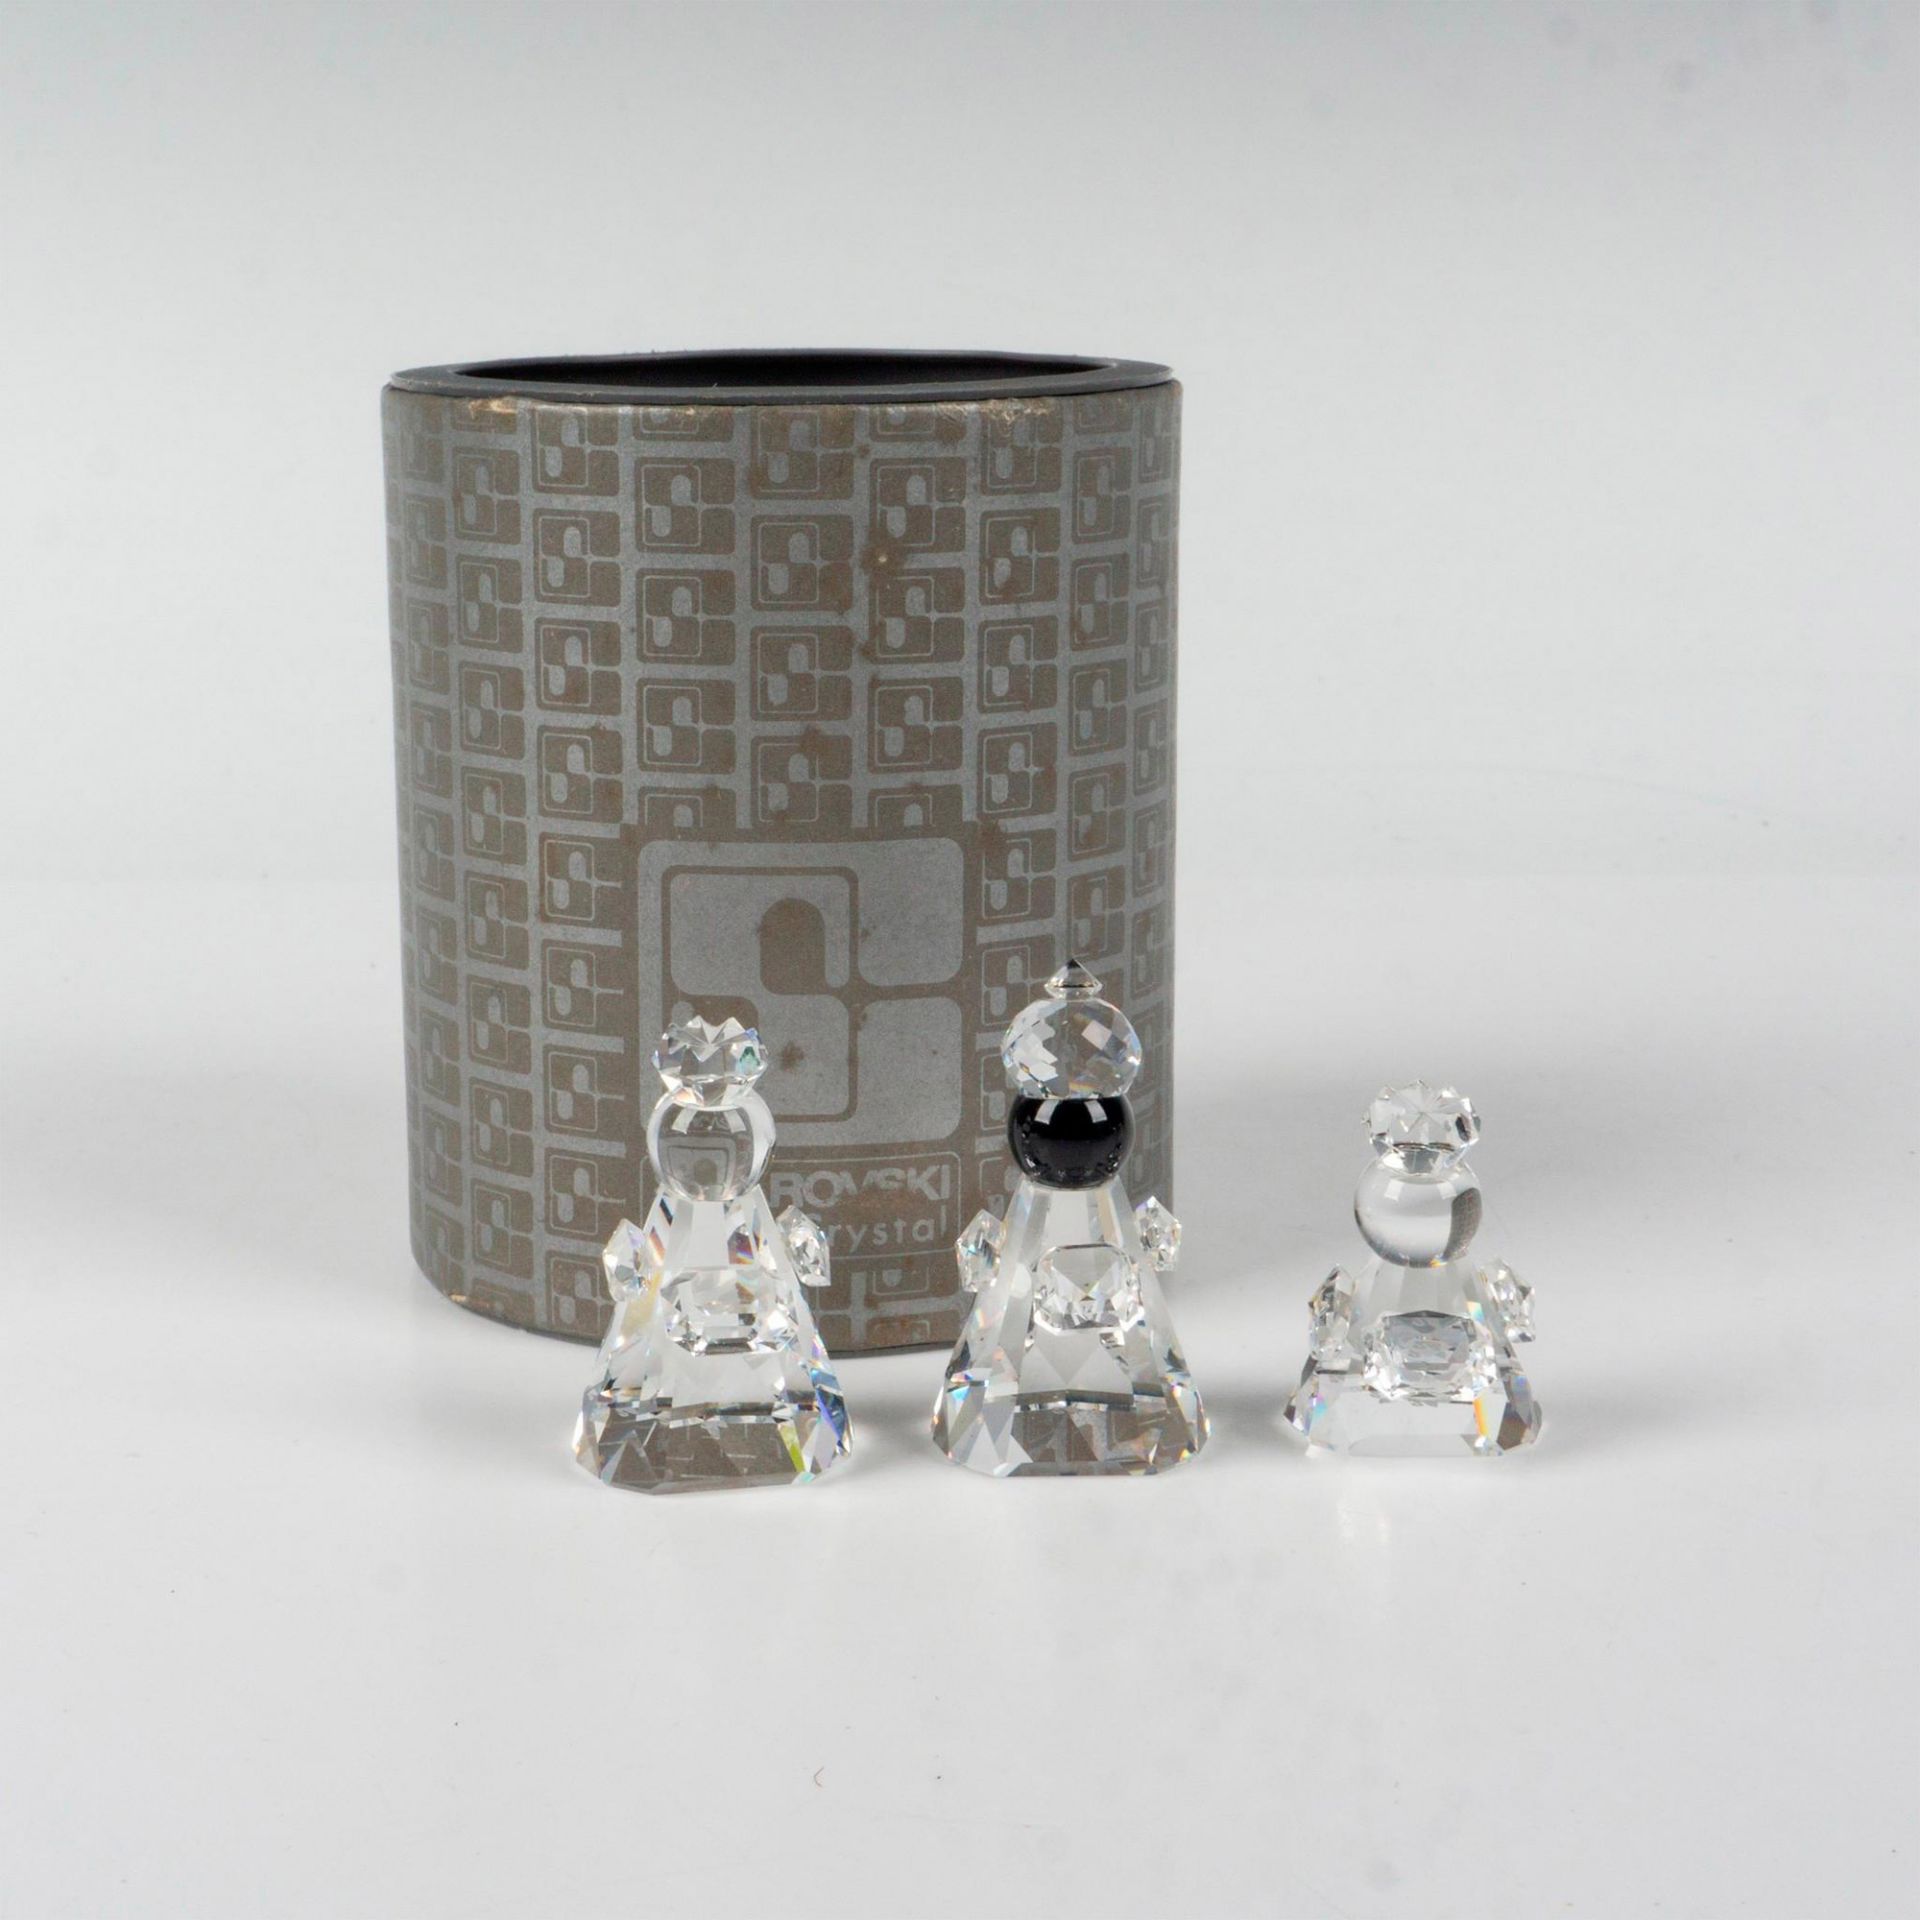 Swarovski Silver Crystal Figurine, Wise Men - Image 4 of 4